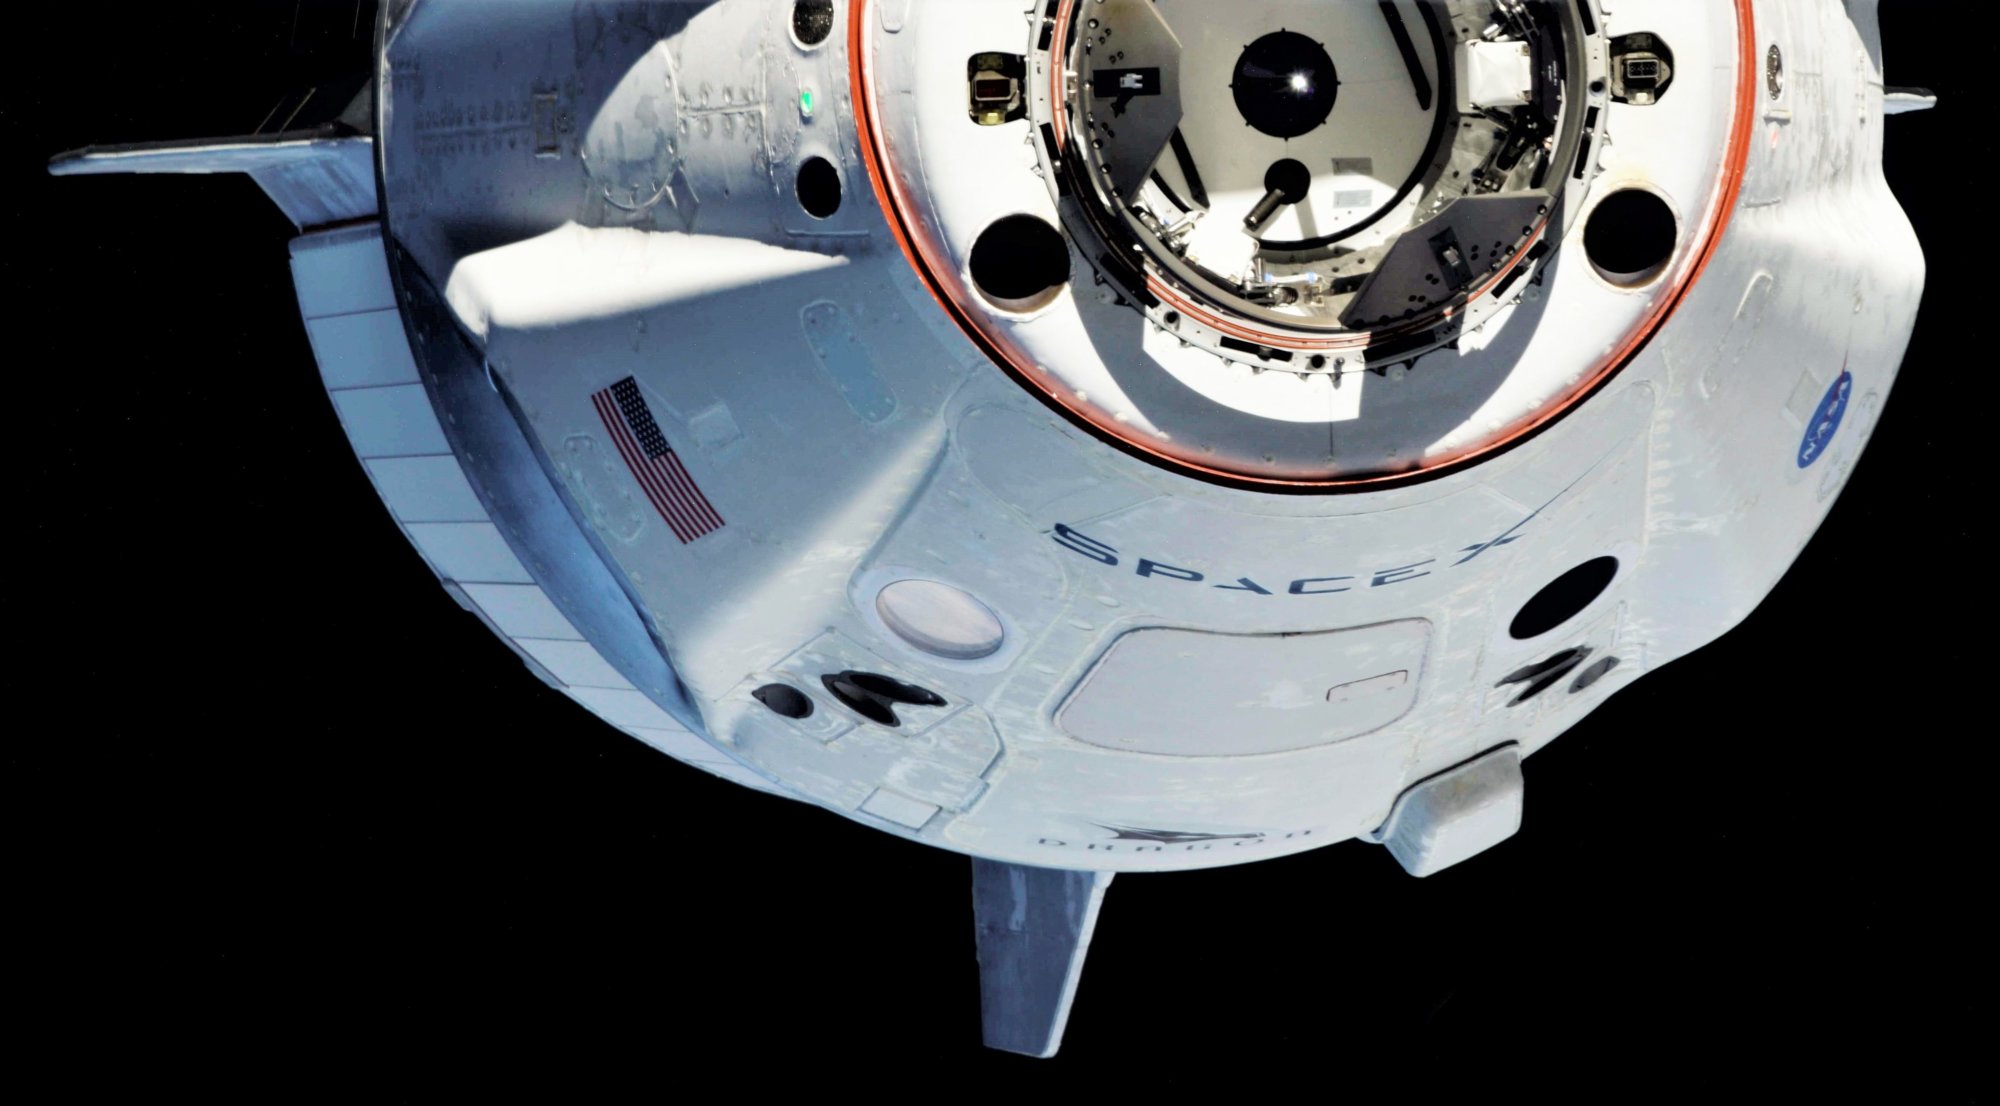 Crew-Dragon-DM-1-ISS-arrival-030319-Oleg-Kononenko-2-edit-4-e1551775100724.jpg